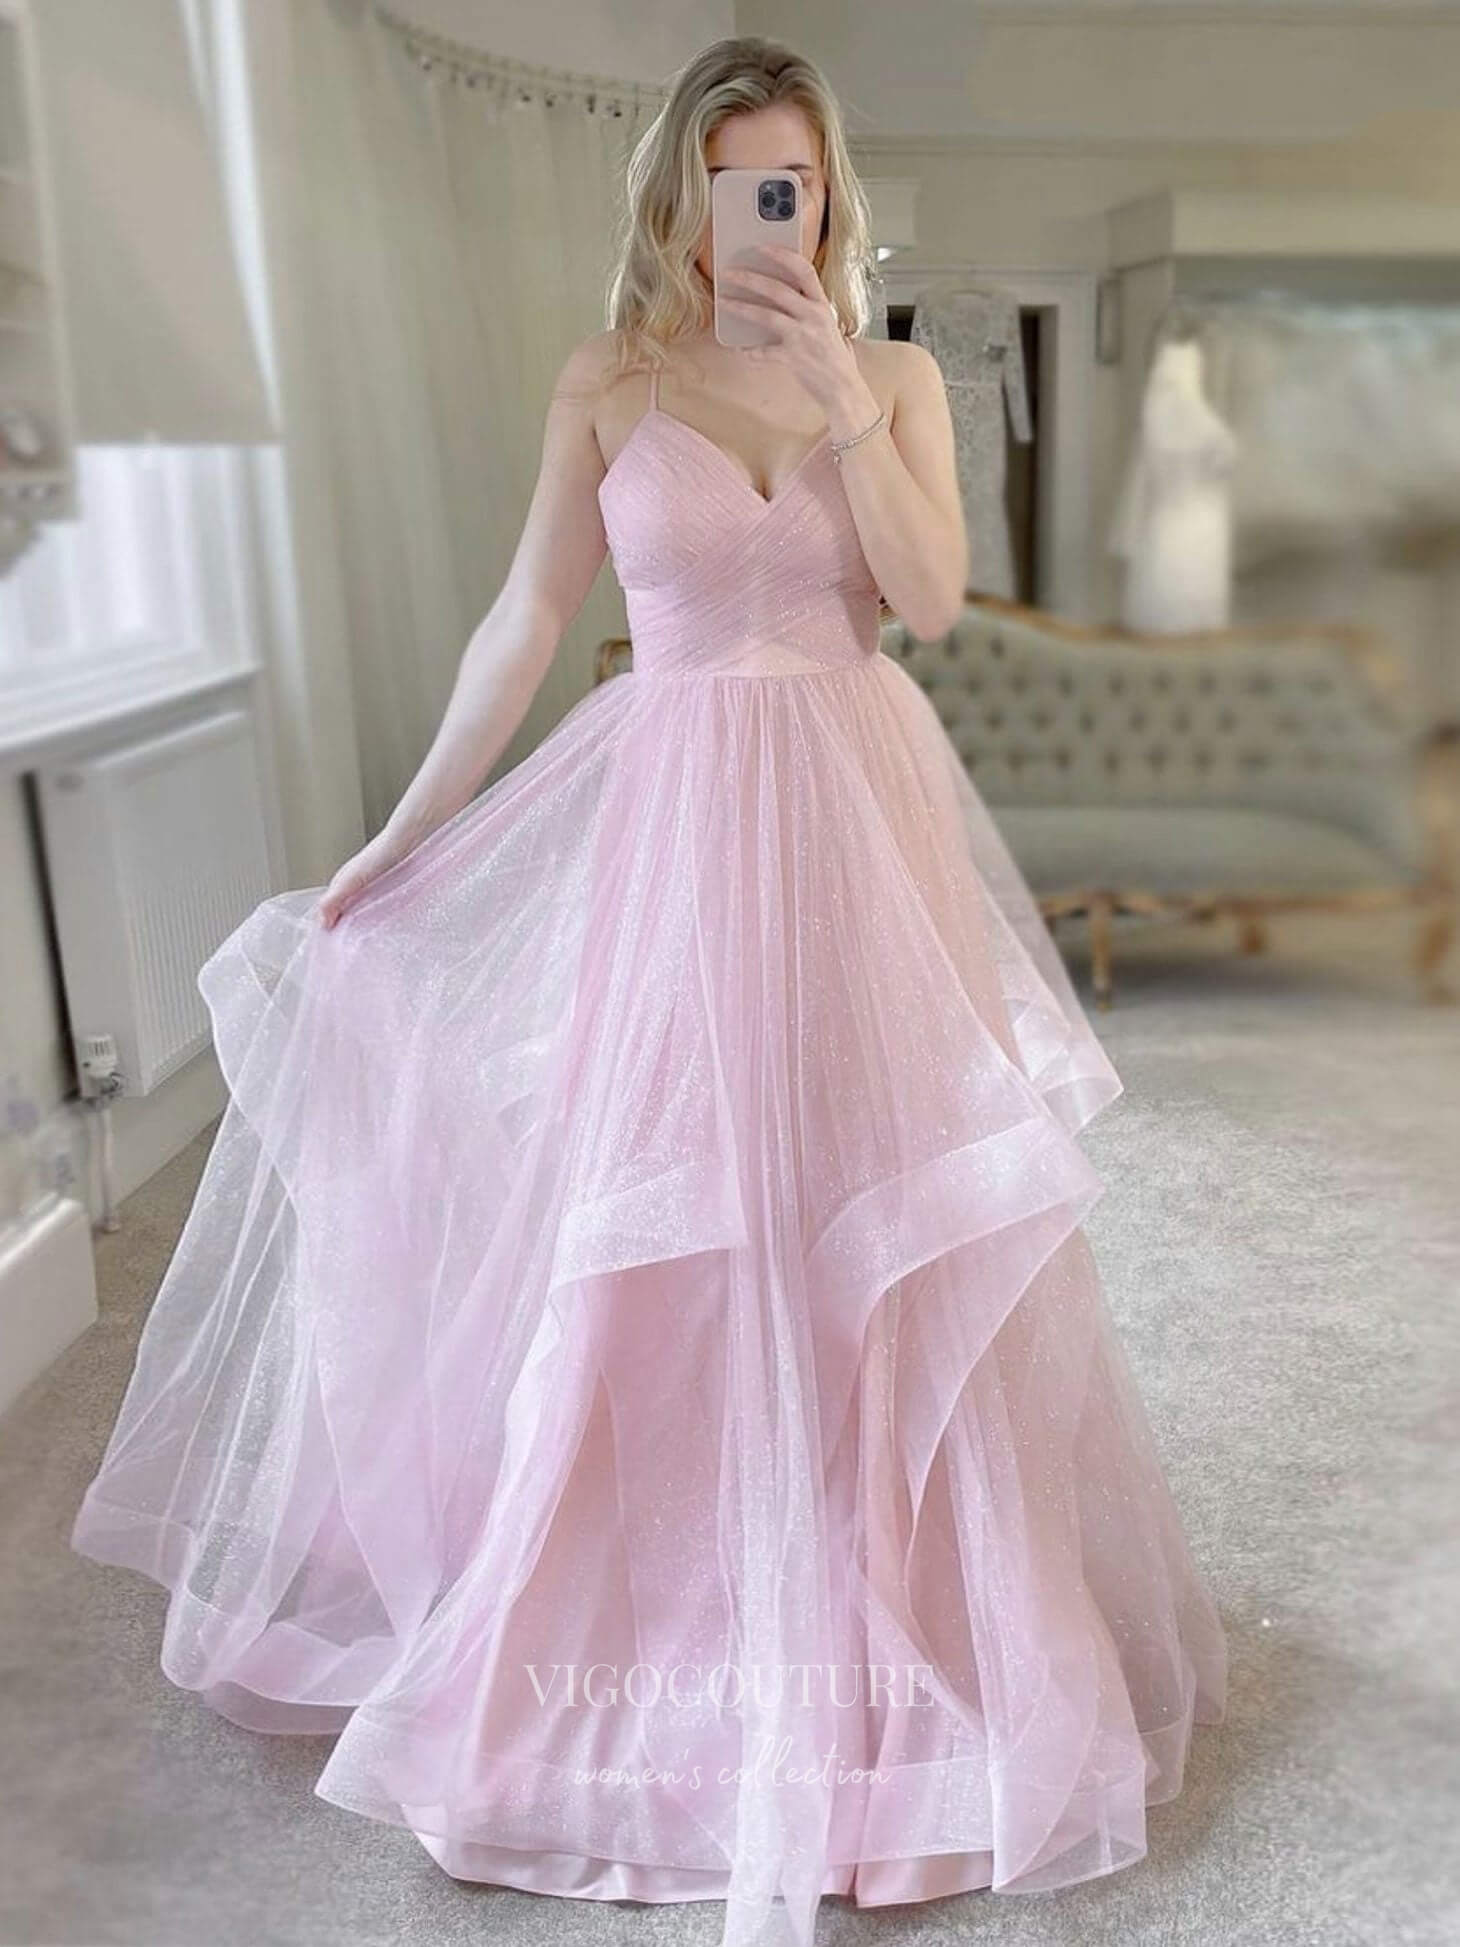 vigocouture-Blush Spaghetti Strap Tiered Prom Dresses Sparkly Tulle Evening Dress 21706-Prom Dresses-vigocouture-Blush-US2-